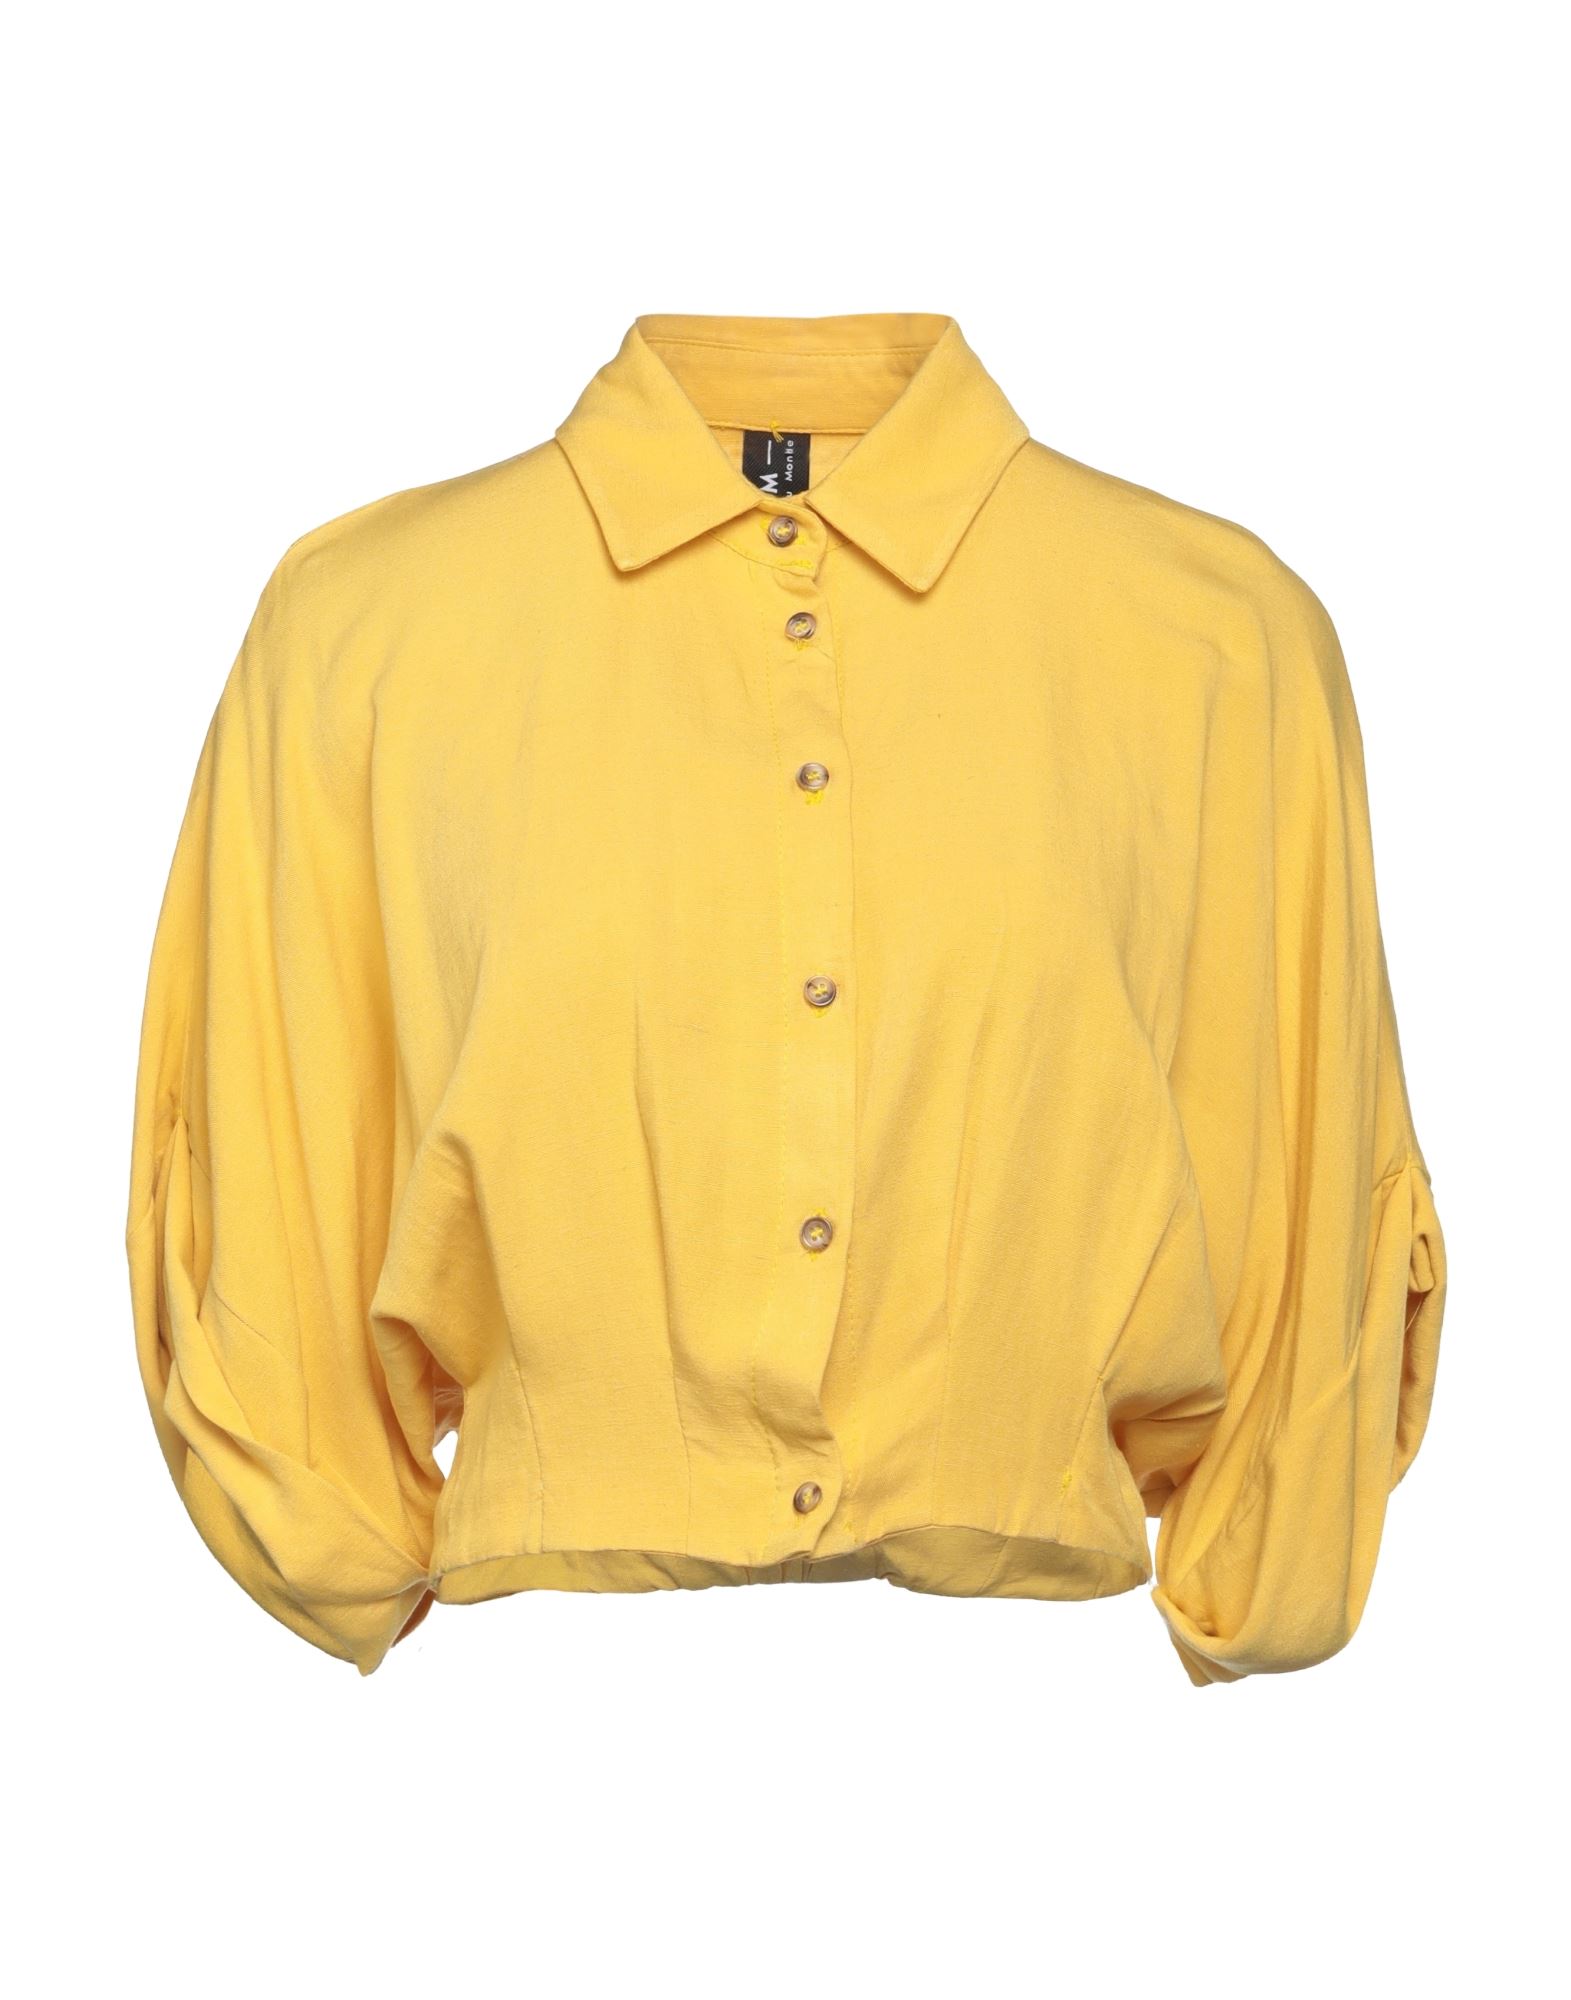 Mdm Mademoiselle Du Monde Shirts In Yellow